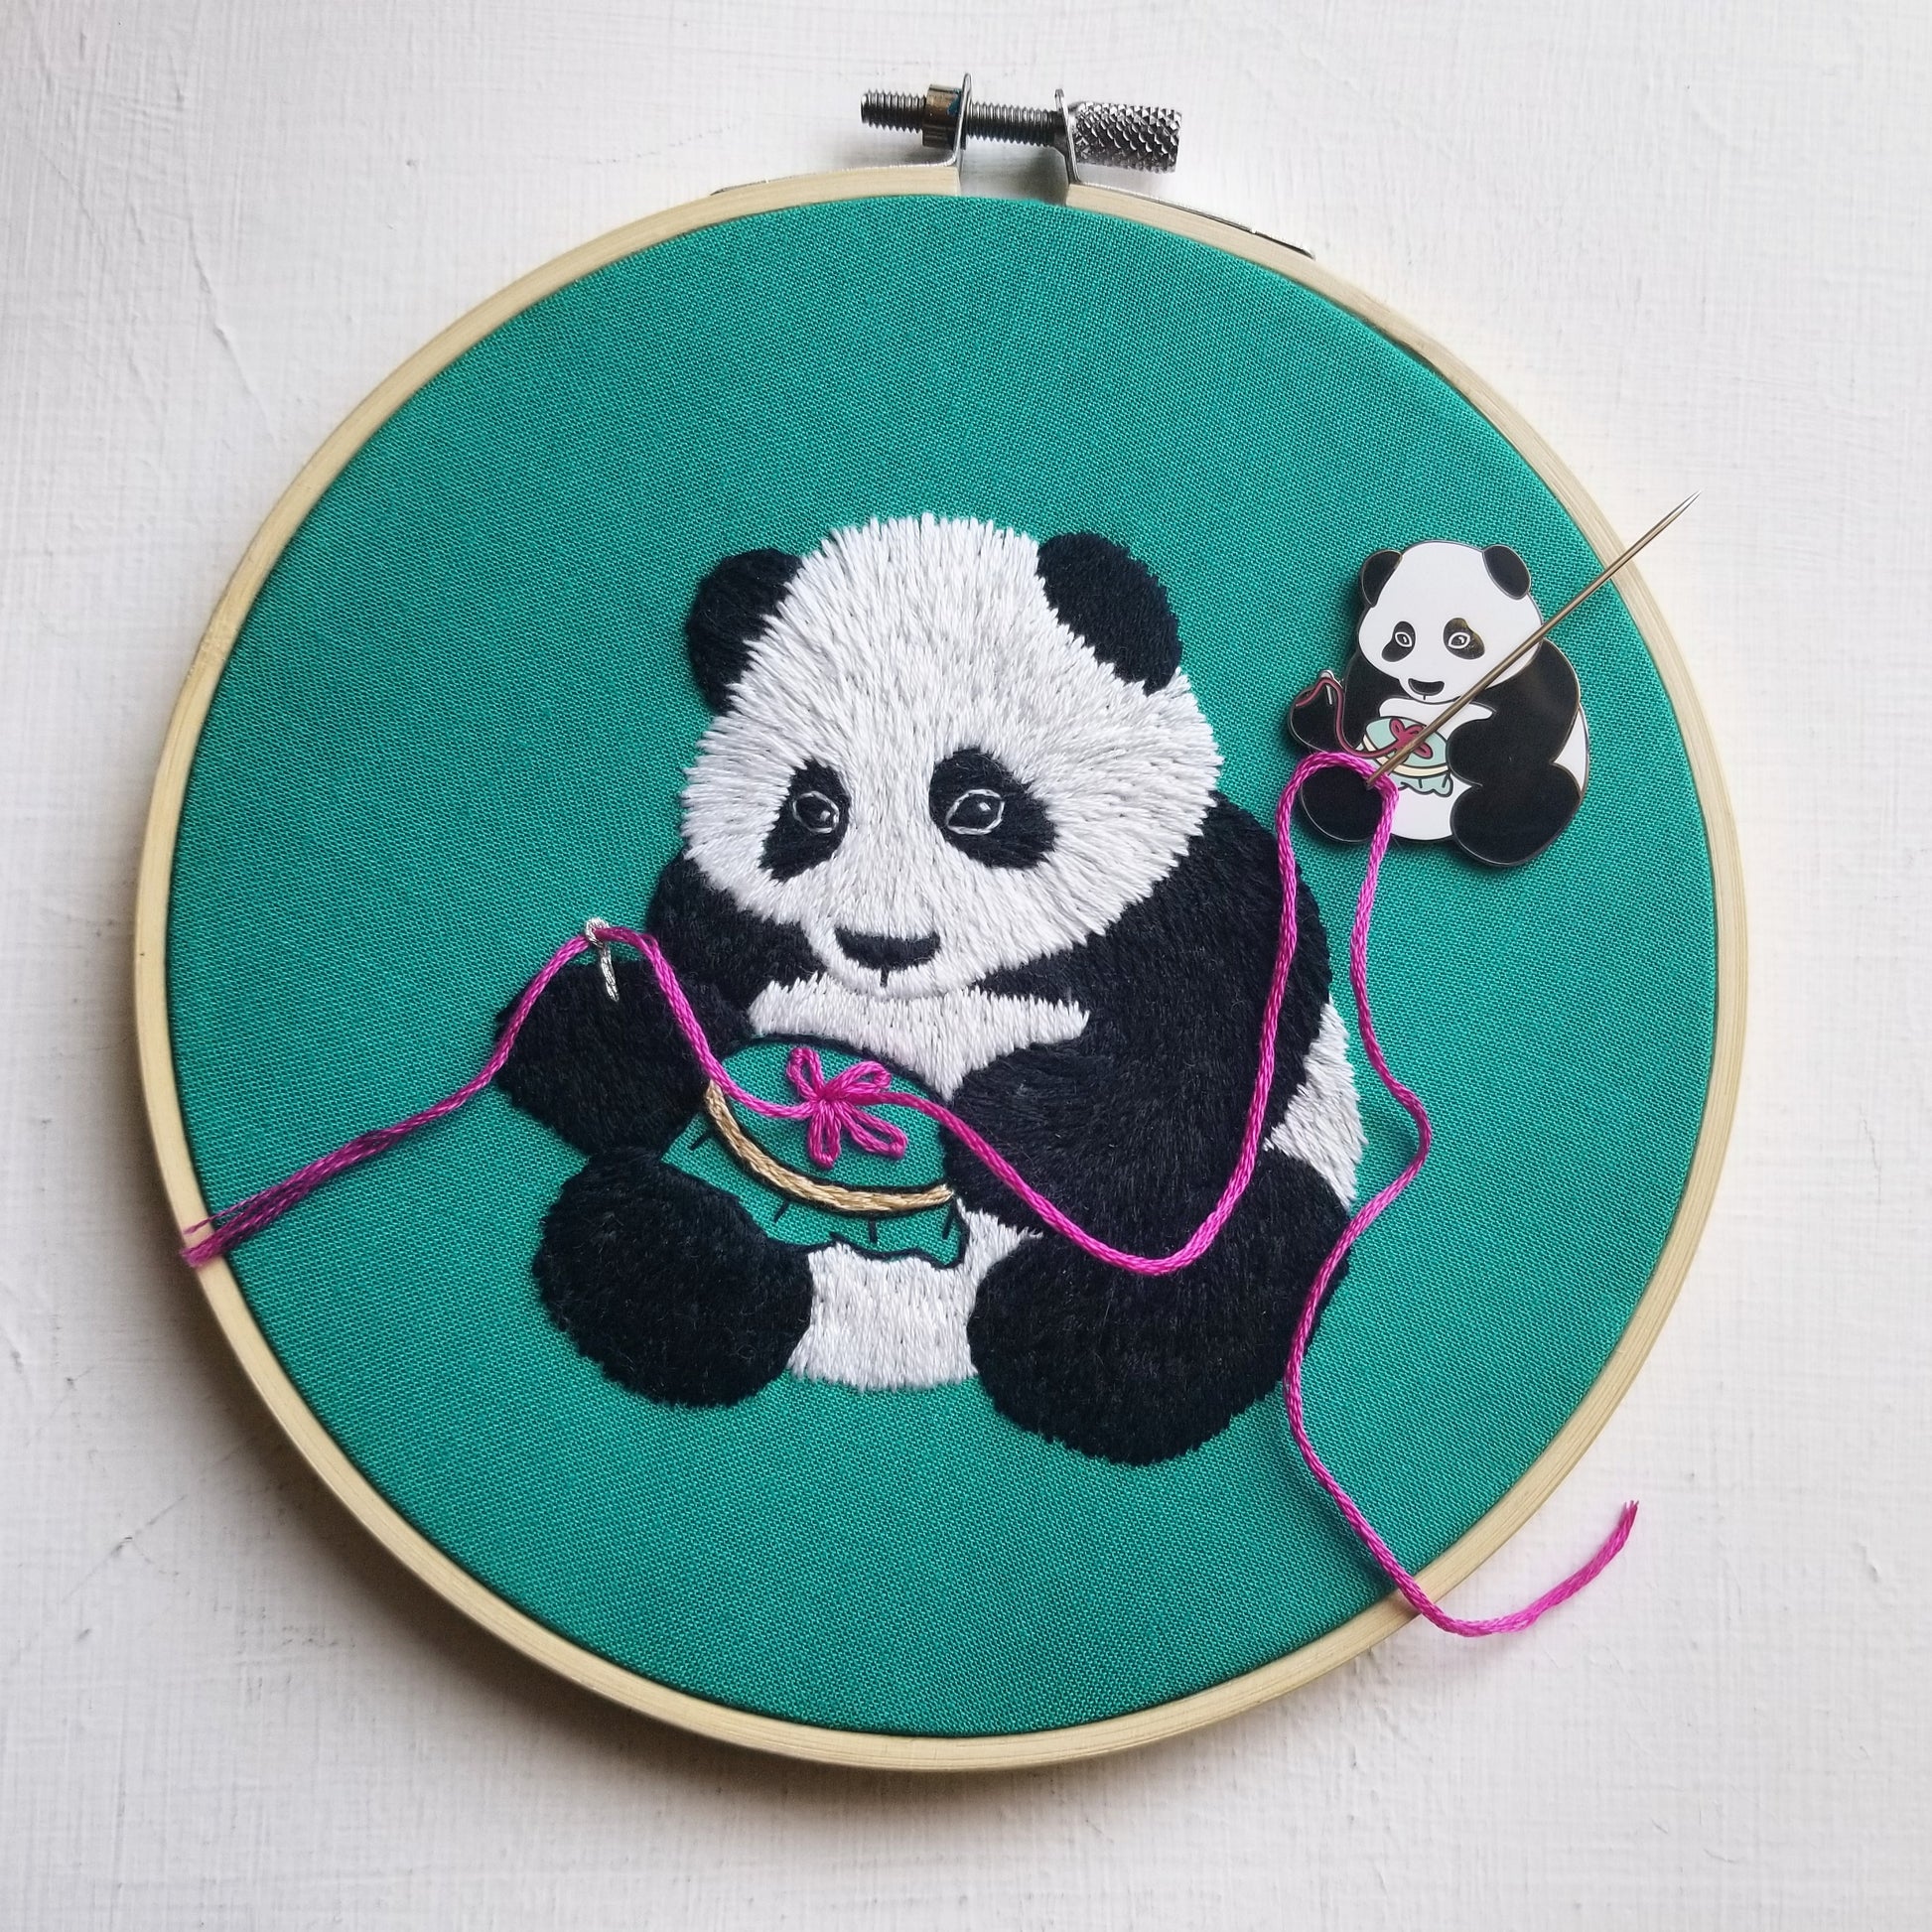 Hedgehog Enamel Needle Minder – Jessica Long Embroidery